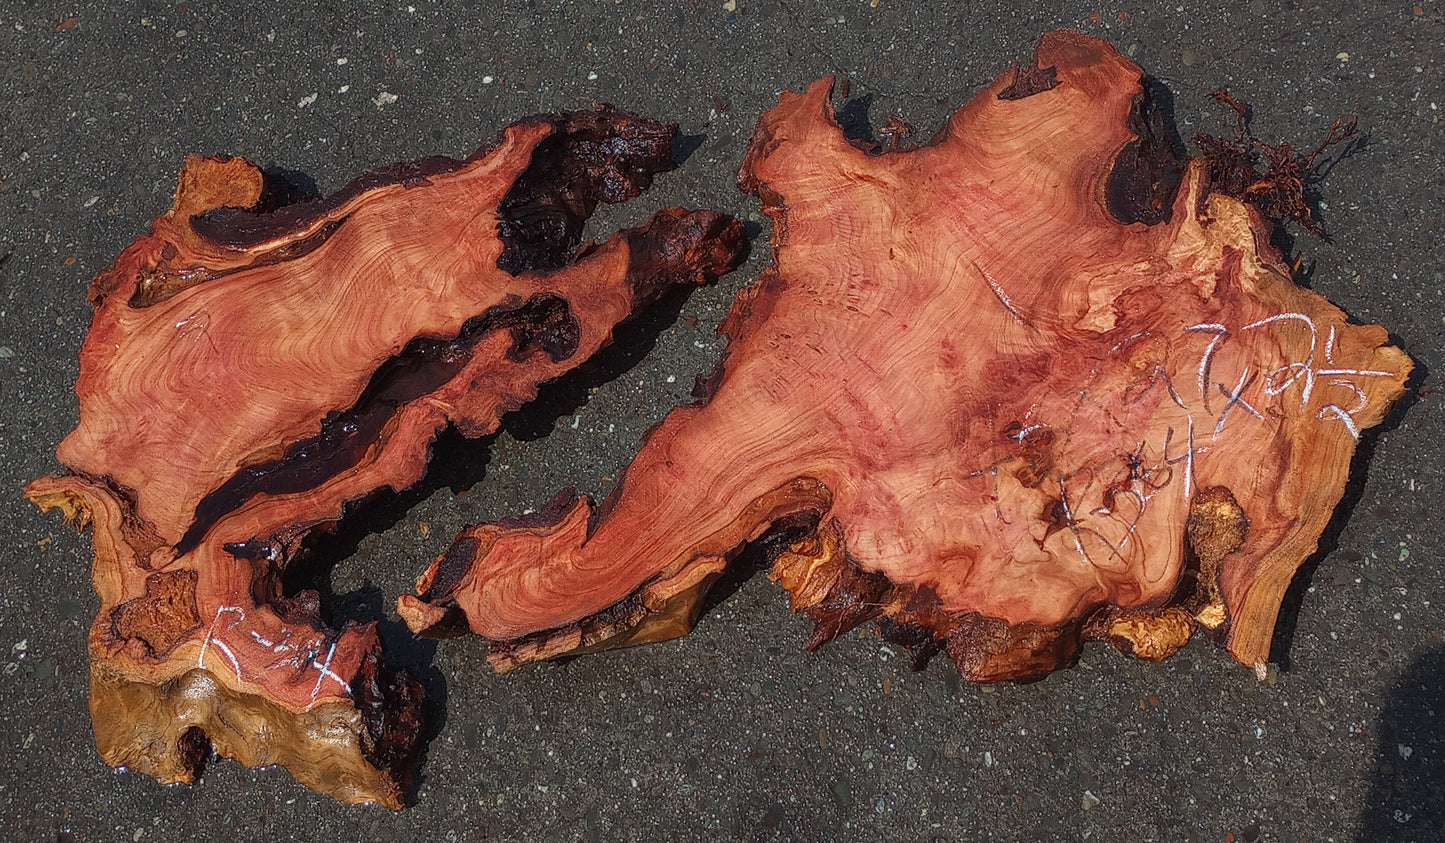 epoxy river table | redwood burl | Wall sculpture | DIY wood crafts | R-34